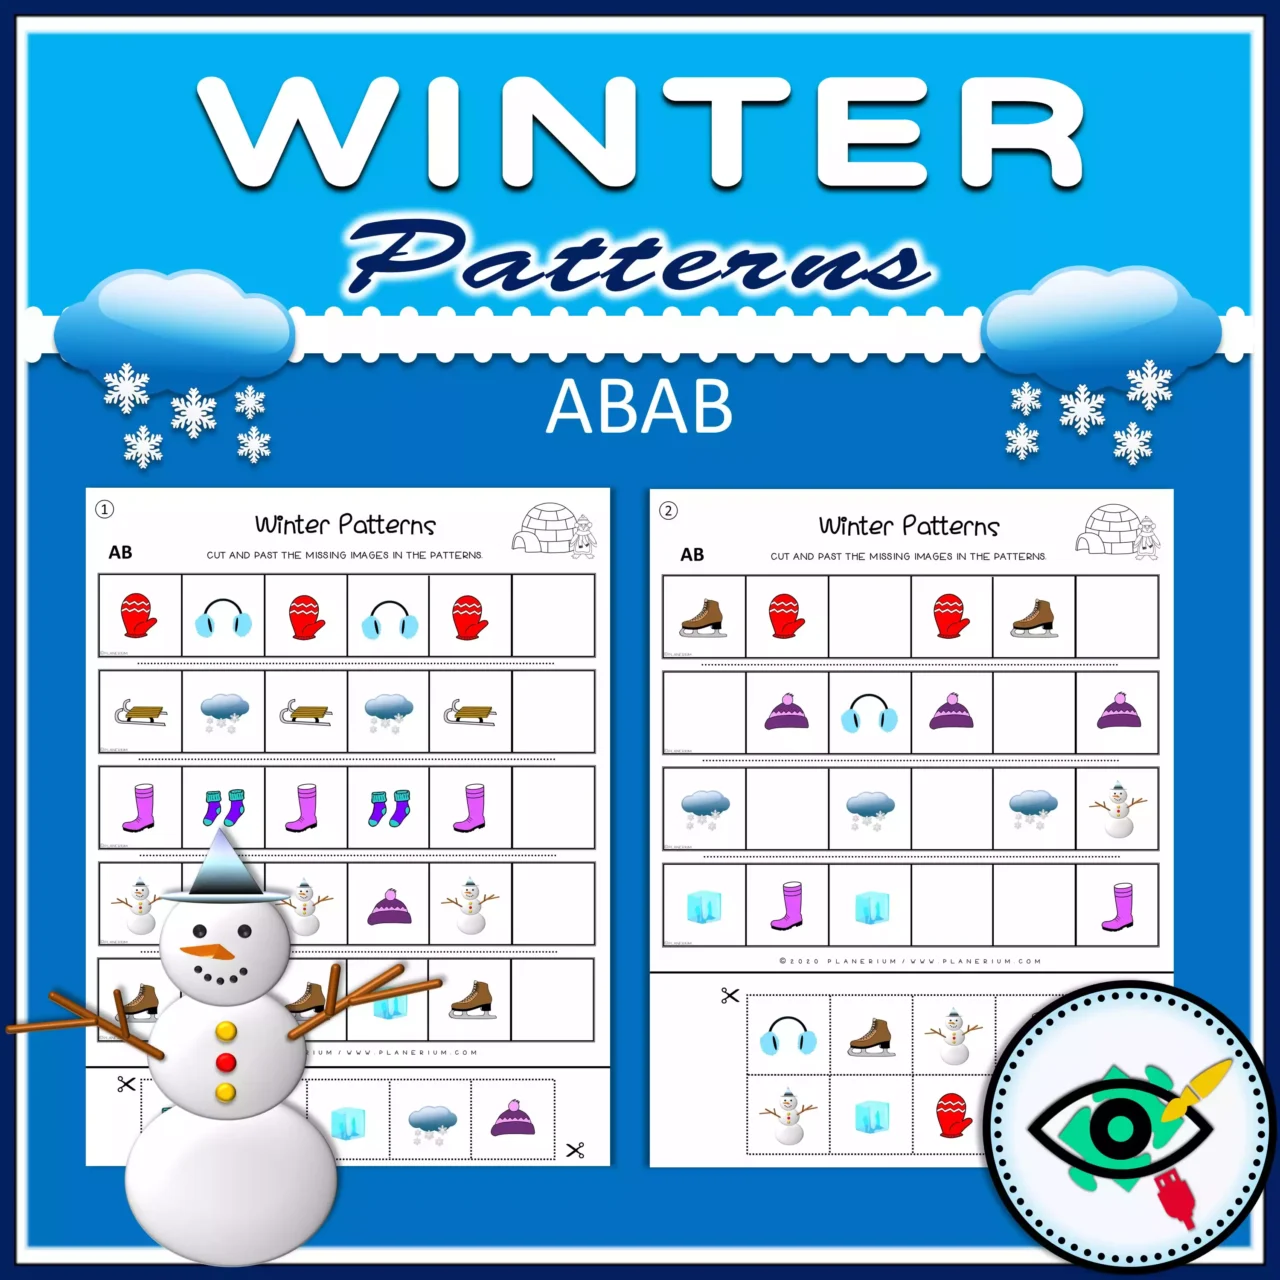 Winter - Patterns Activity - Image Title 2